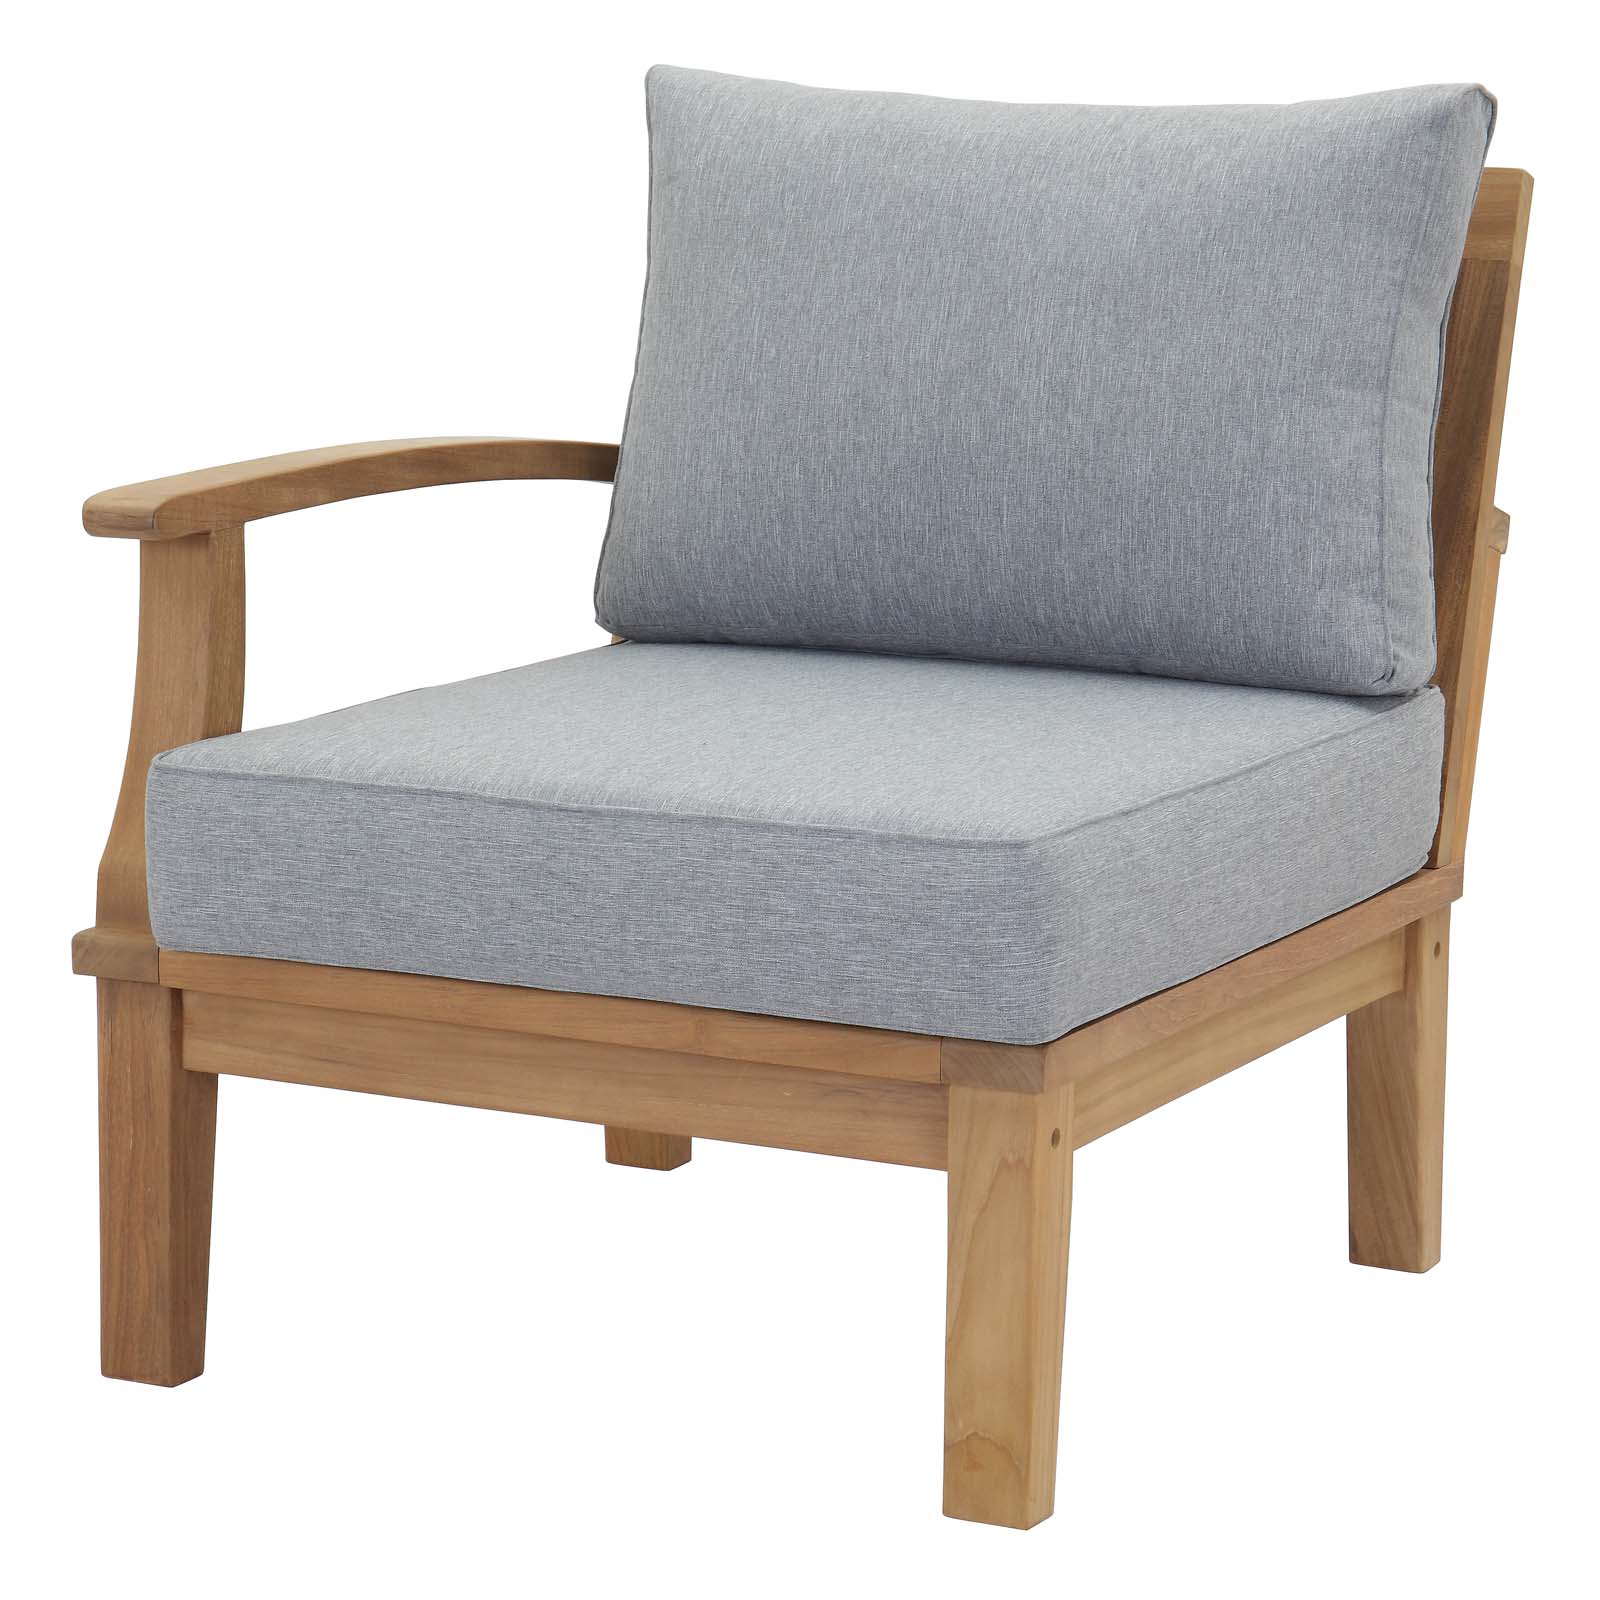 Modern Contemporary Urban Design Outdoor Patio Balcony Garden Furniture Lounge Chair Set, Wood, Grey Gray Natural - image 2 of 6